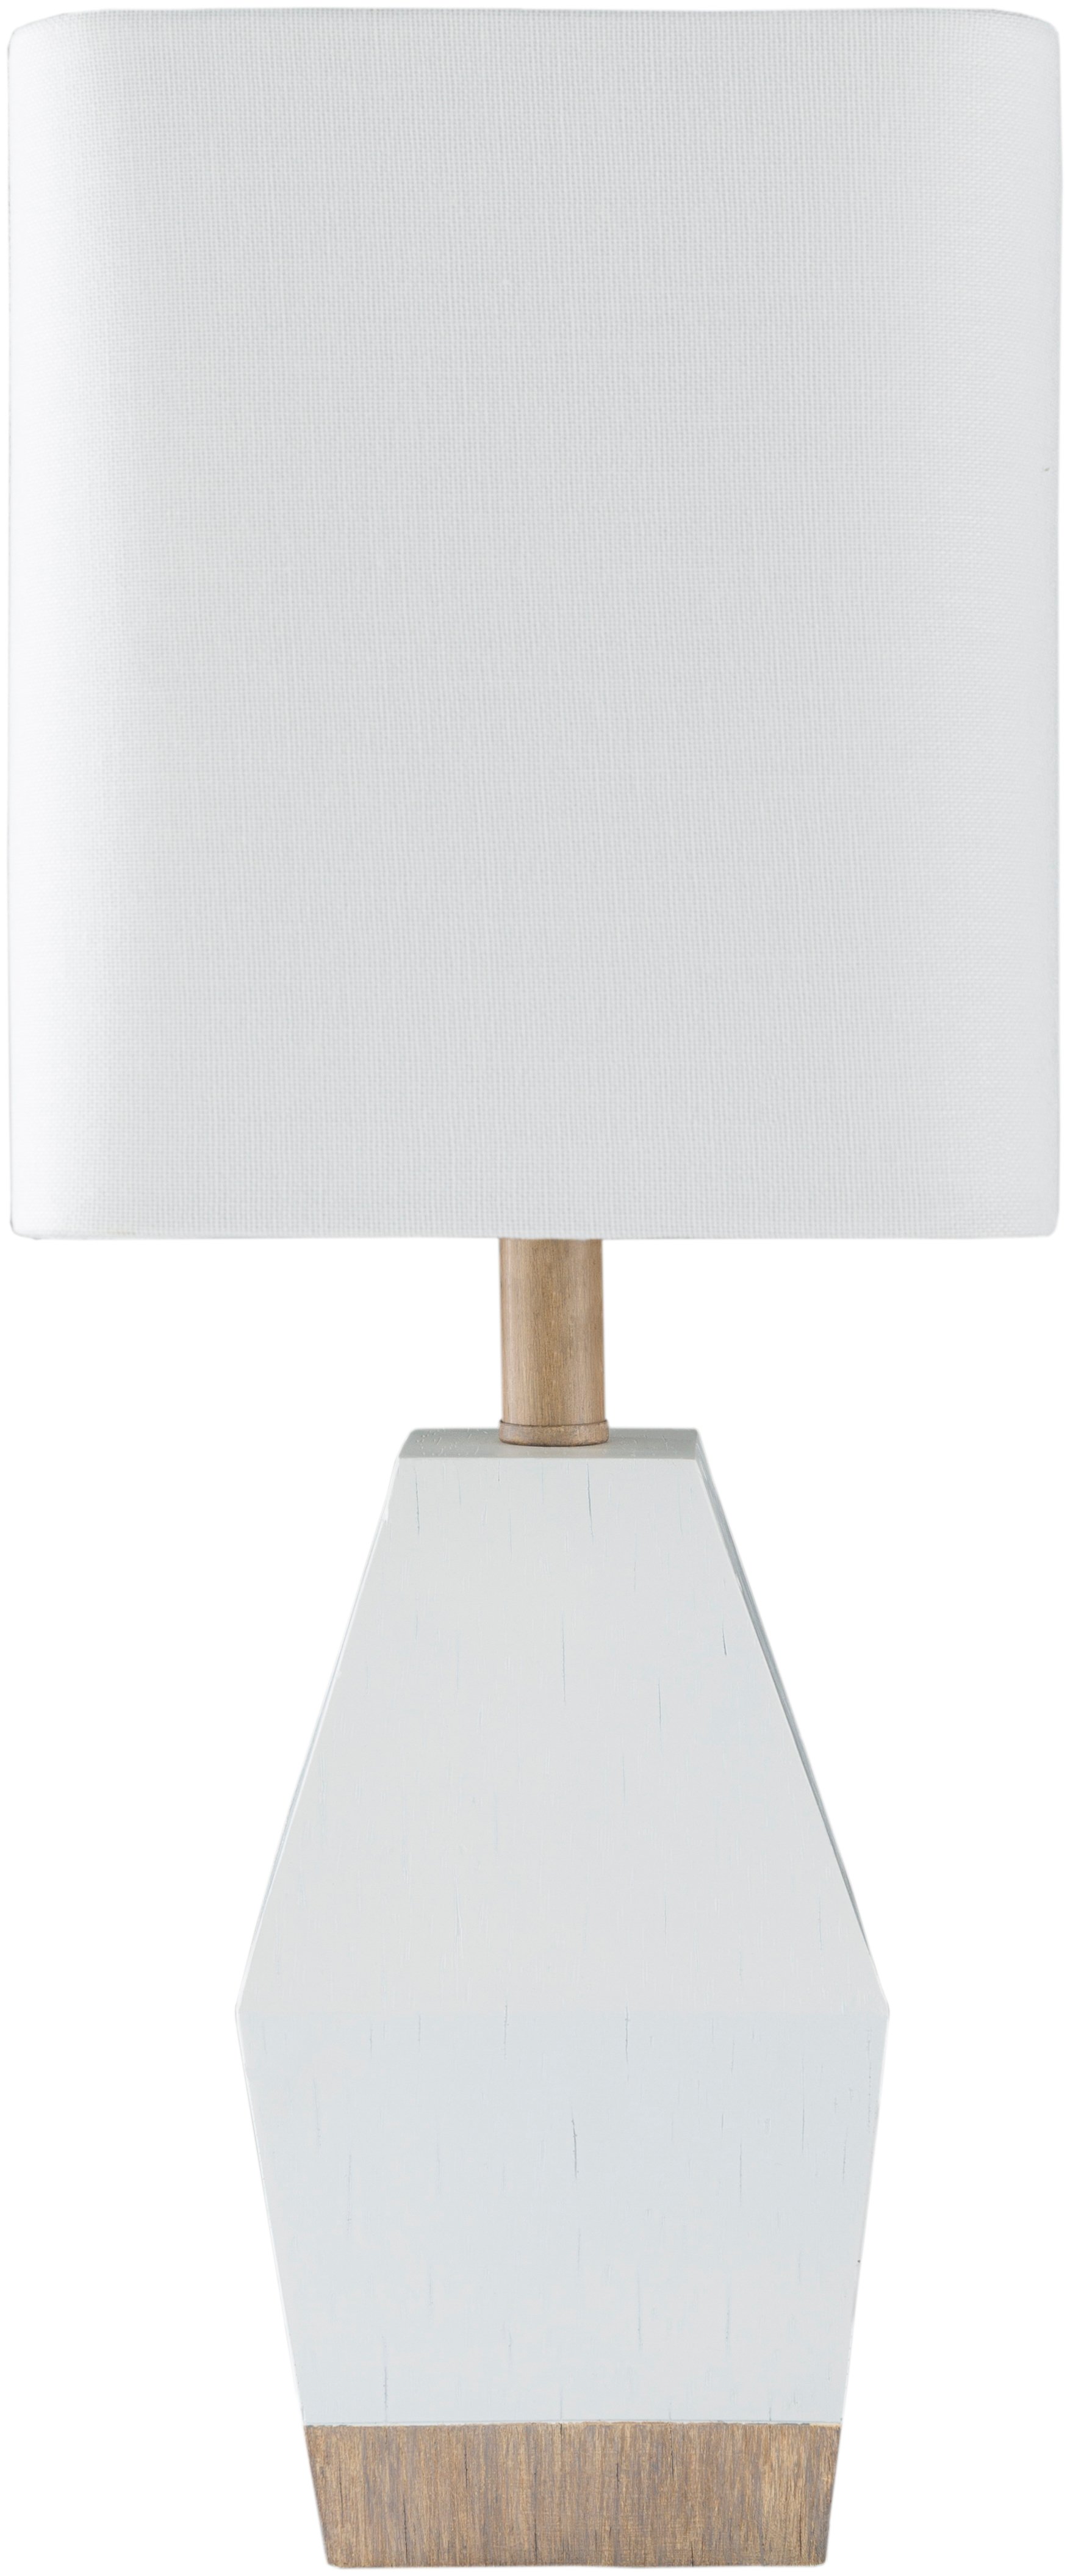 Pimm Table Lamp - Image 0